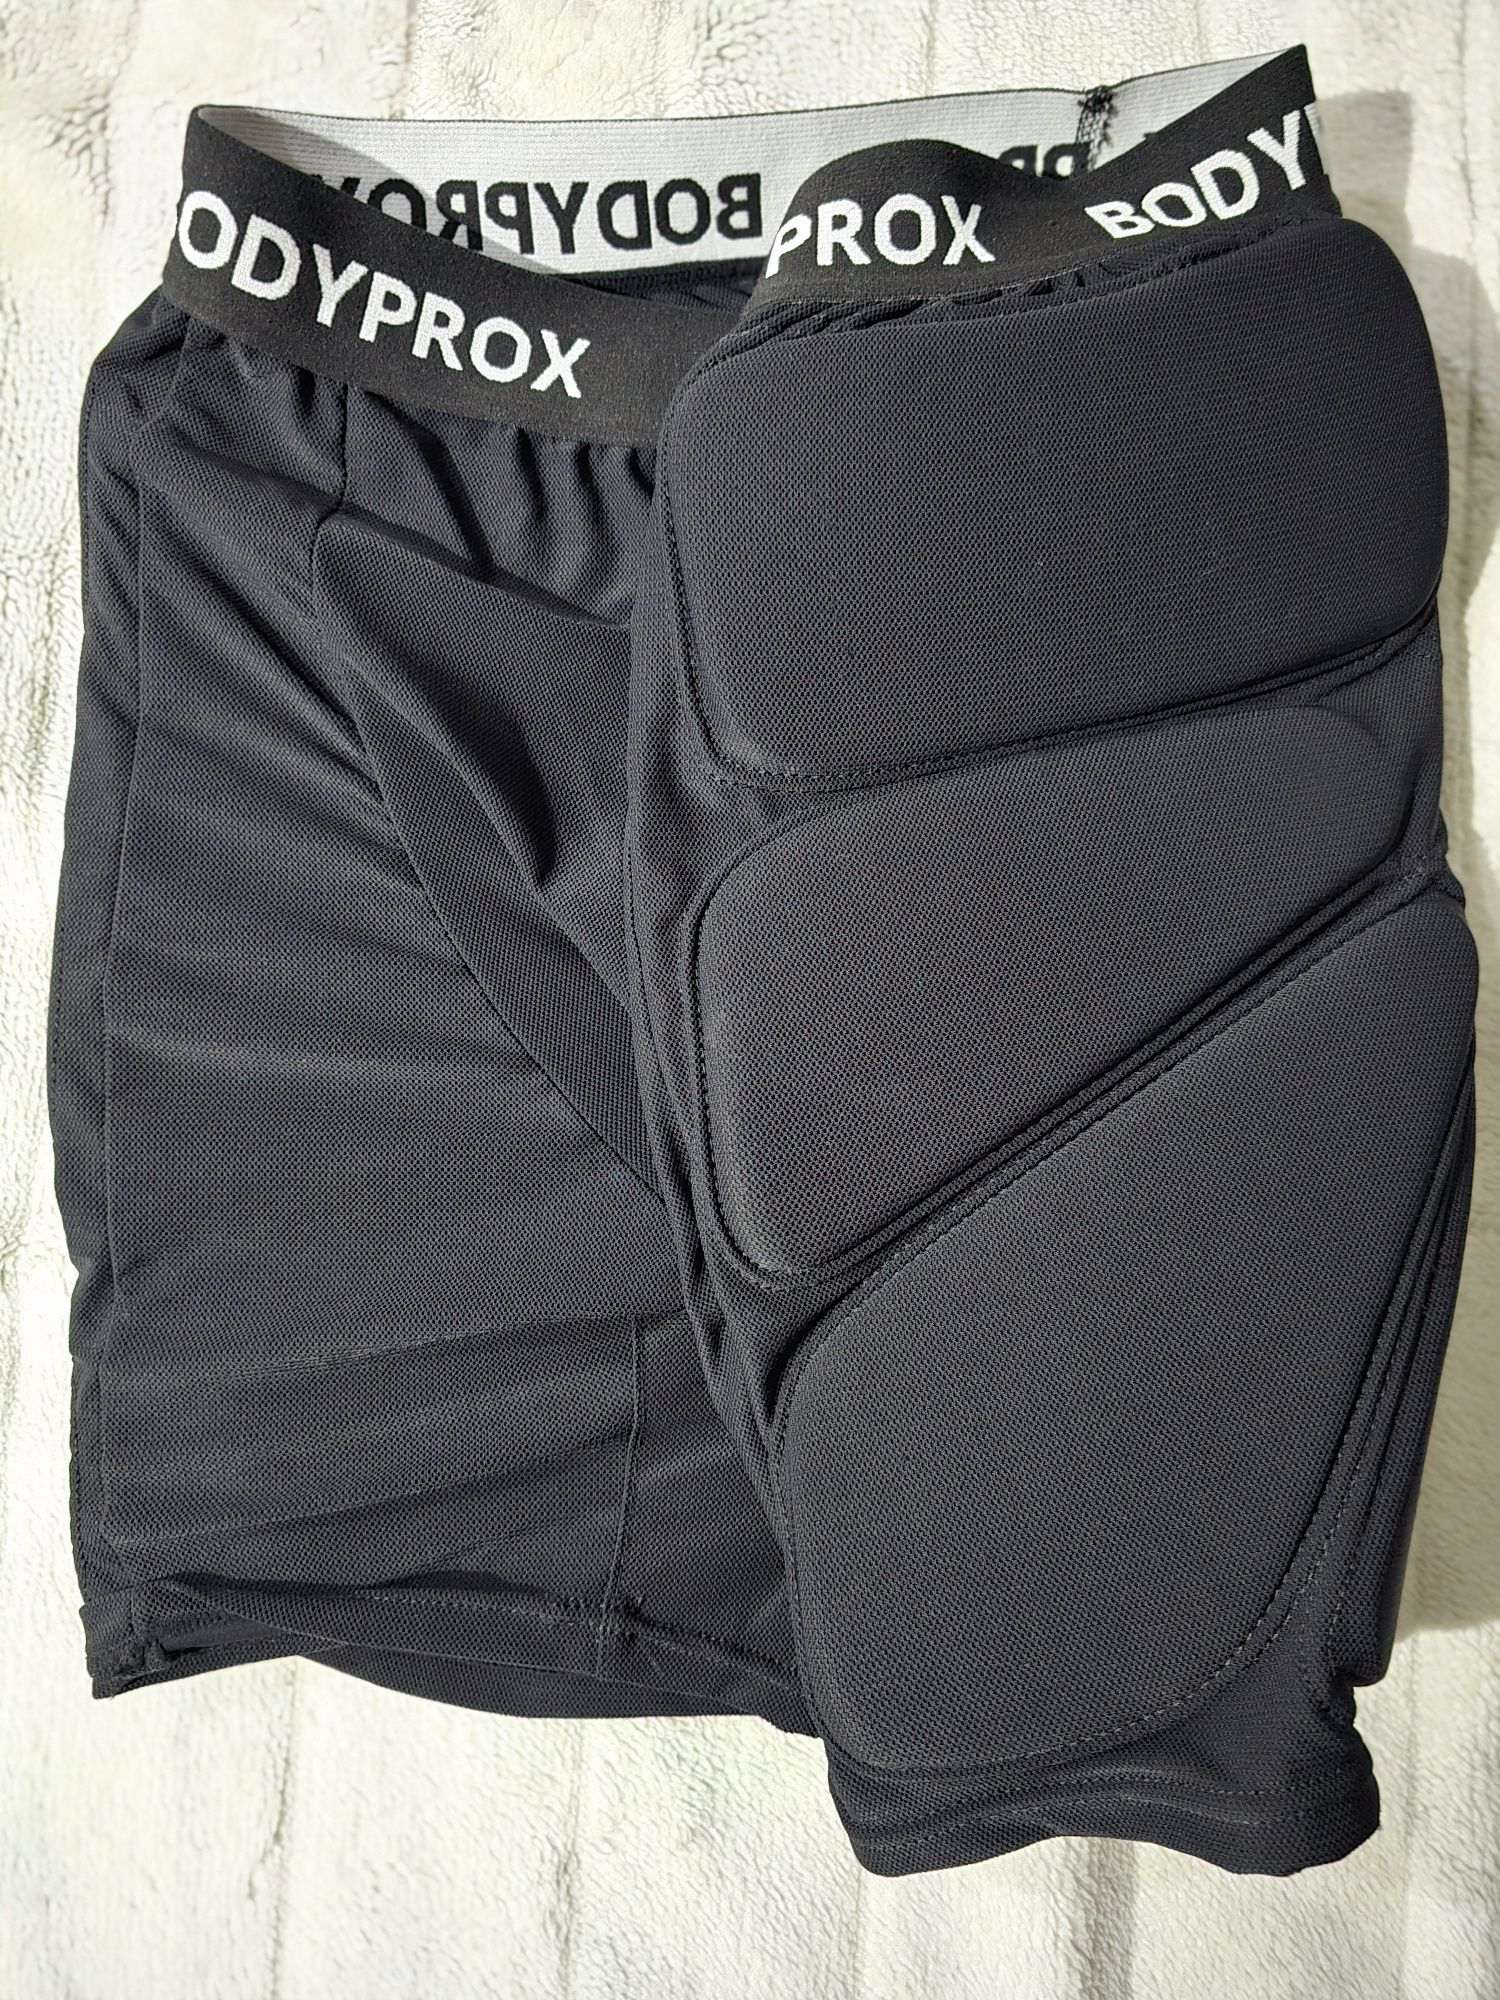 Pantaloni Bodyprox protectie